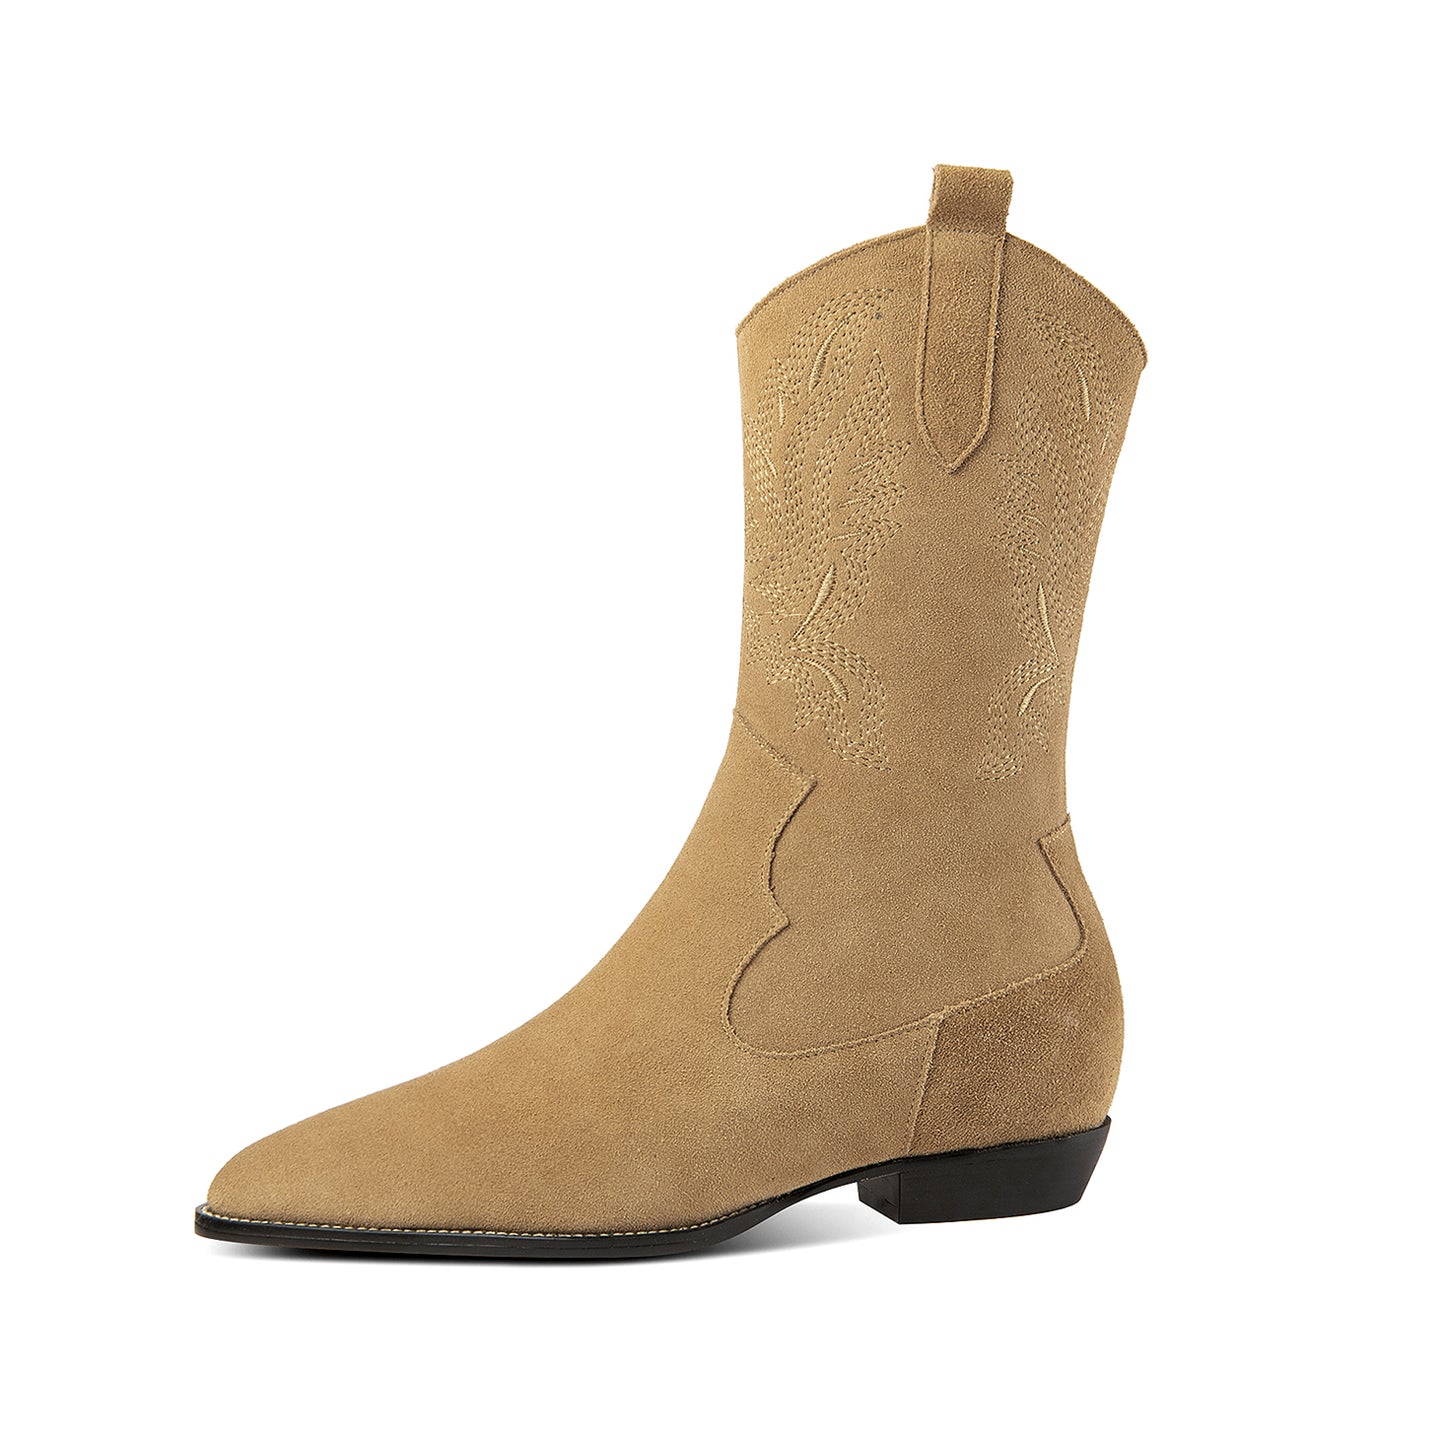 TinaCus Handmade Women's Pointed Toe Suede Leather Block Heel Side Zip Up Mid-Calf Boots